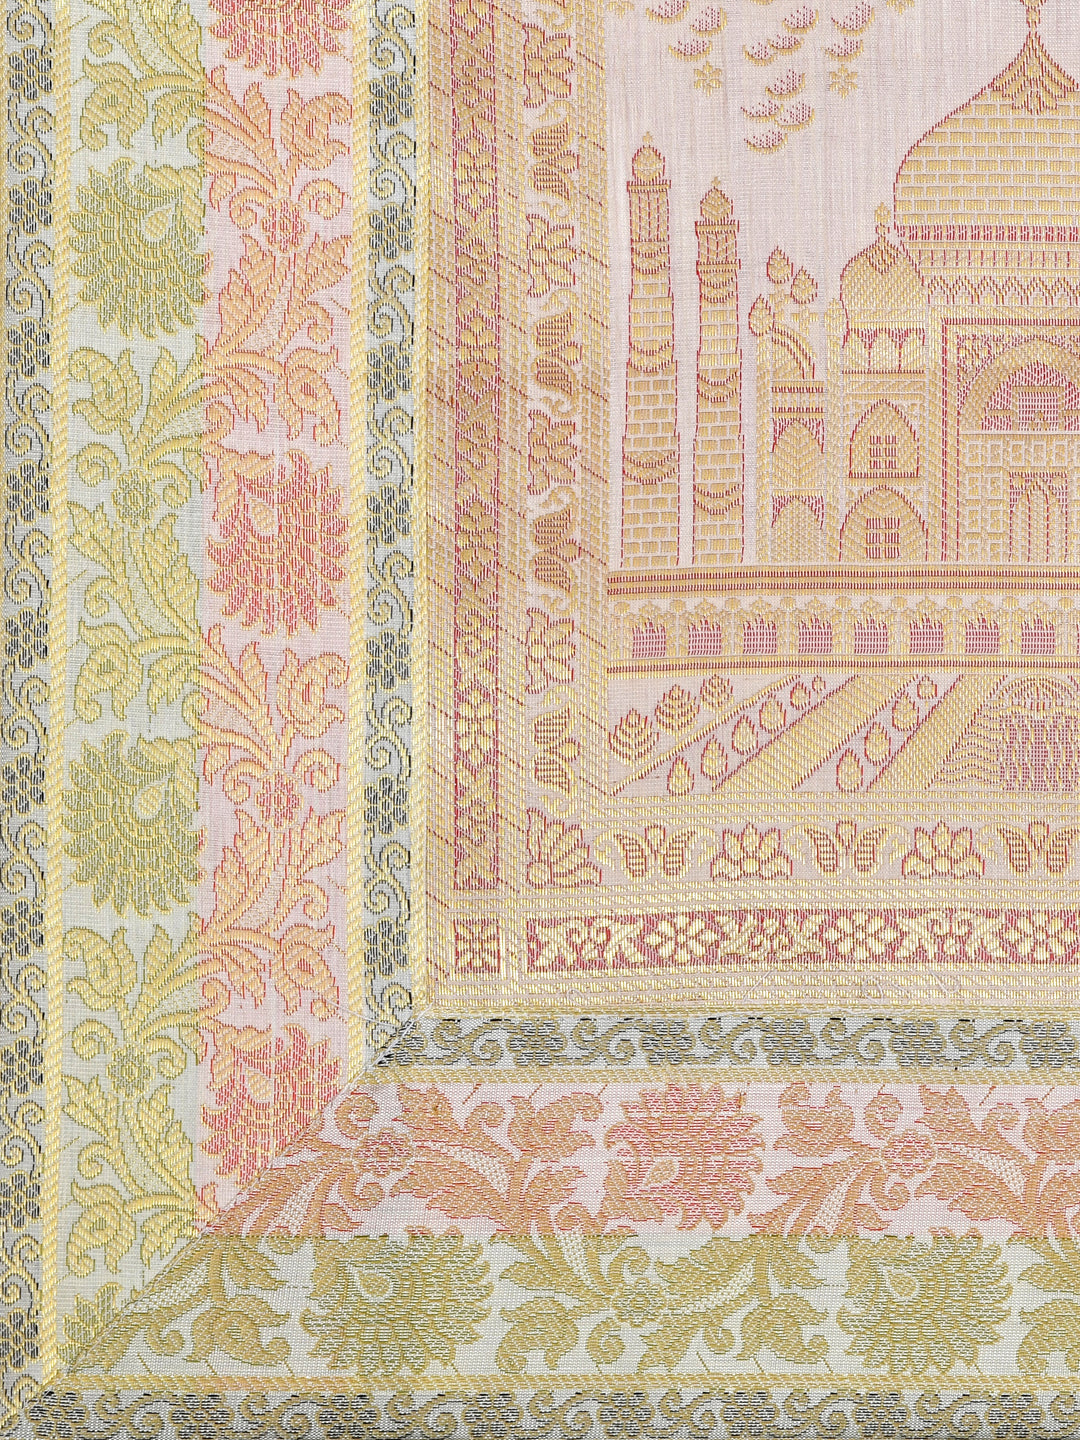 Set of 2 Banarasi Cushion Cover - 16 Inches-10